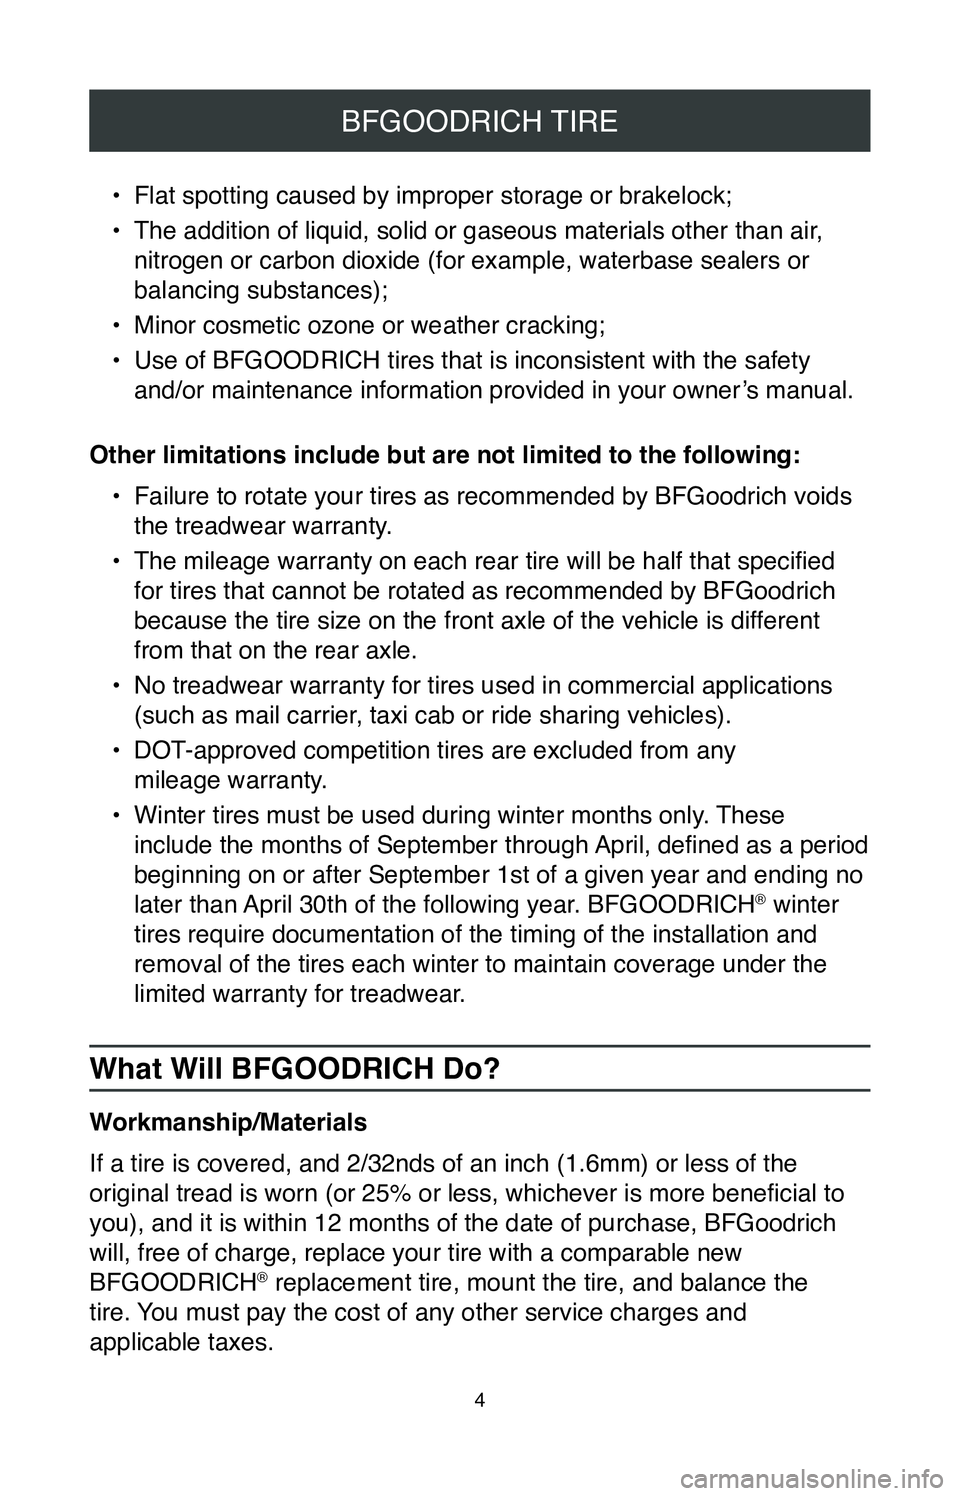 TOYOTA SUPRA 2020  Warranties & Maintenance Guides (in English) 4
BFGOODRICH TIRE
